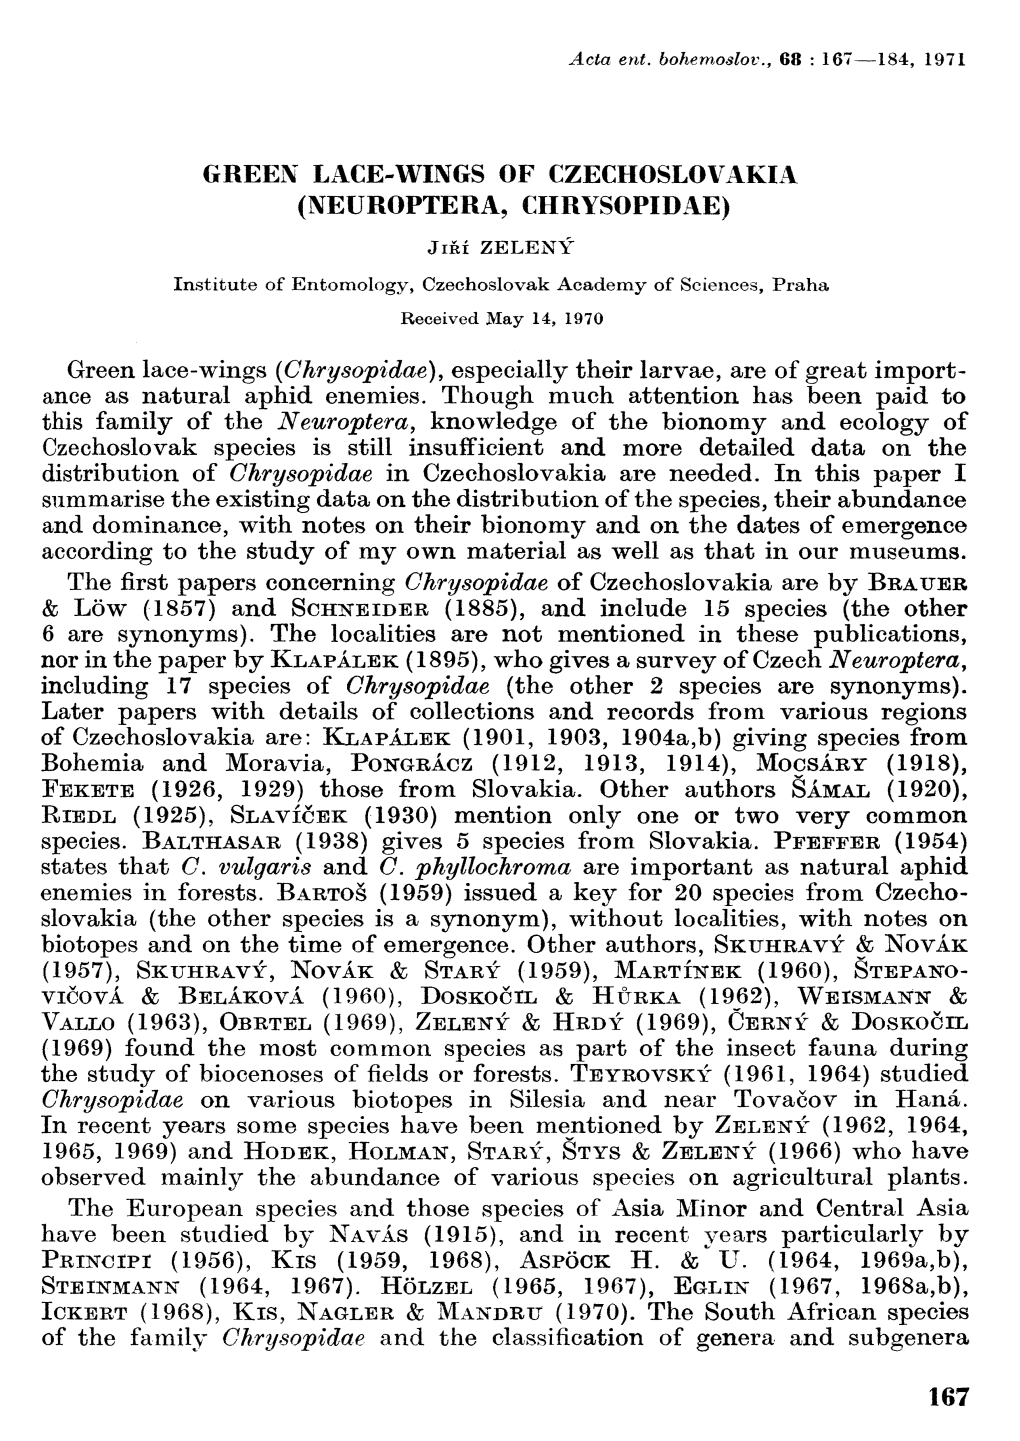 Chrysopa Ciliata \VESMAEL, 1841, Chrysopa Alba Auct